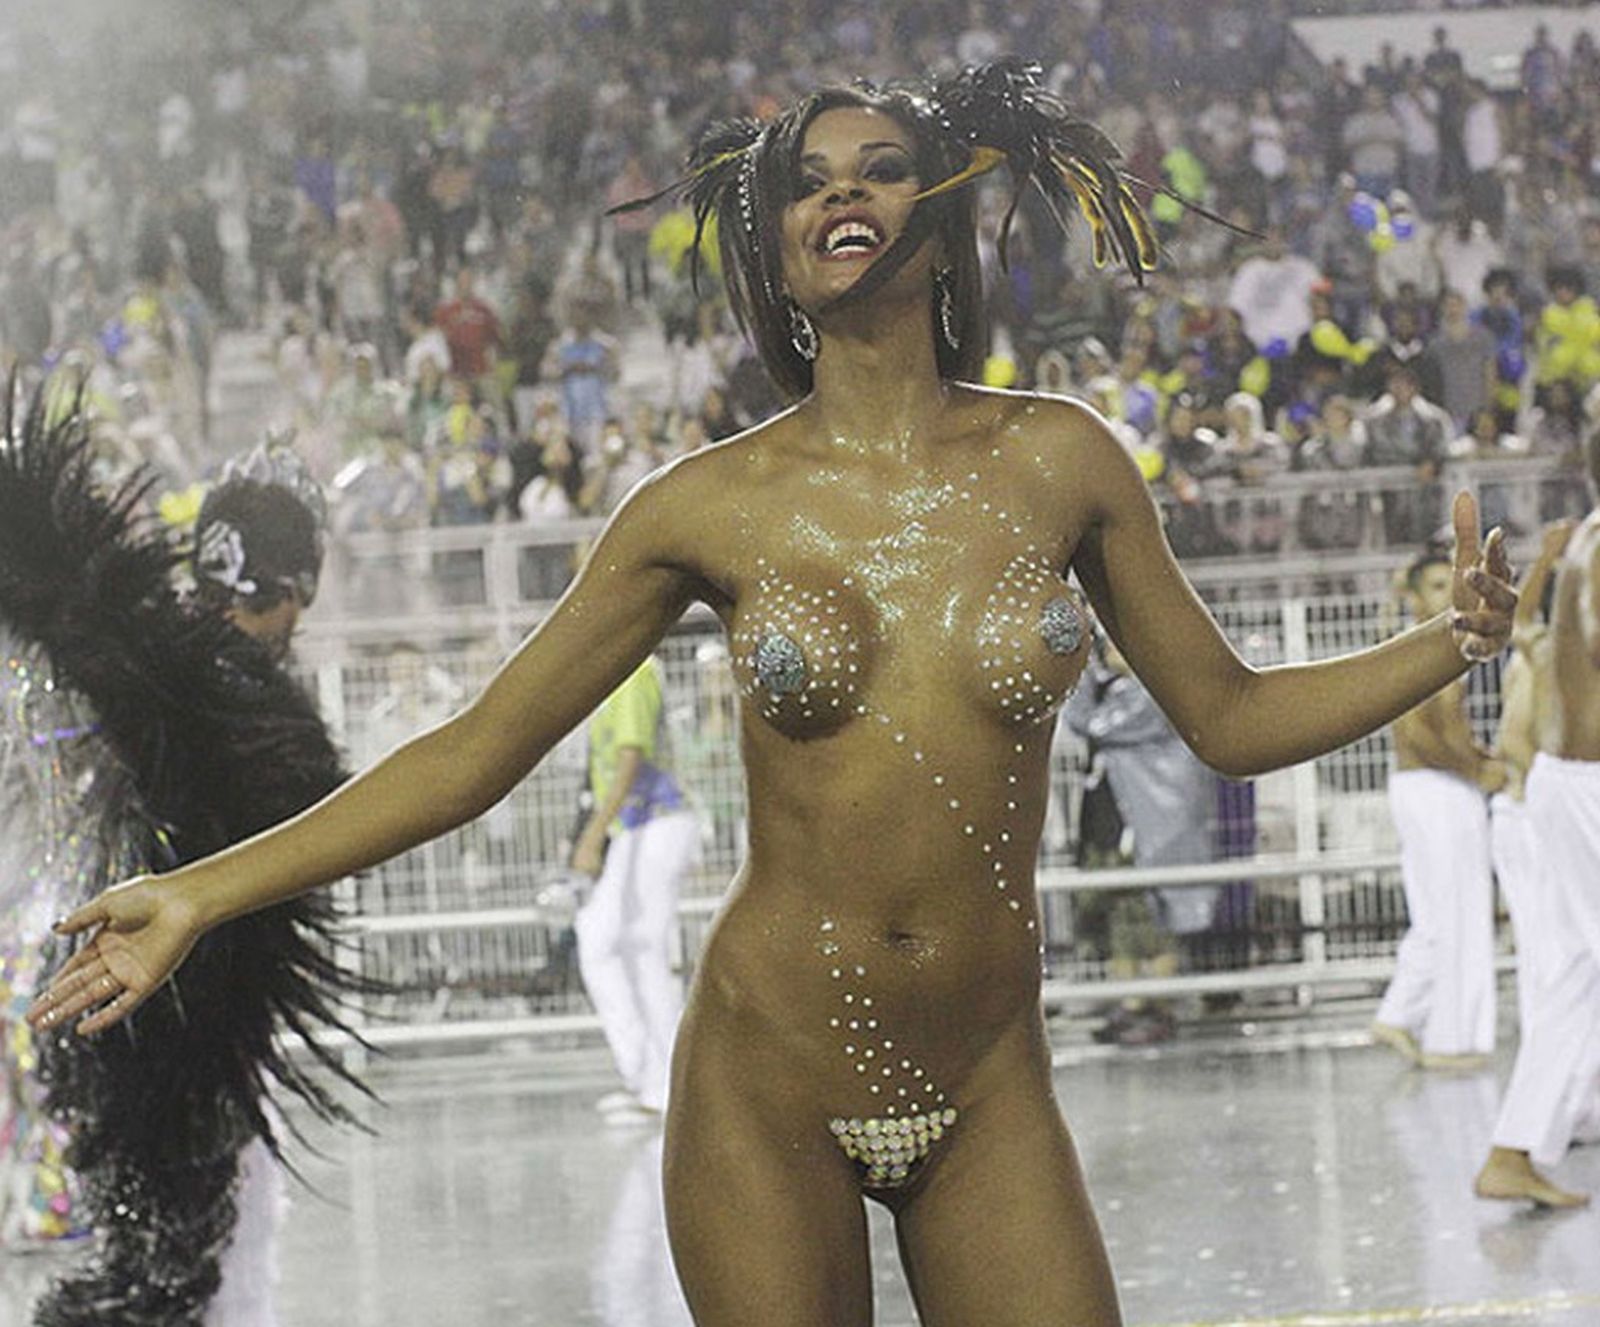 big boobs Brazilian topless dancer Carnival nude MILF beach hi def pic